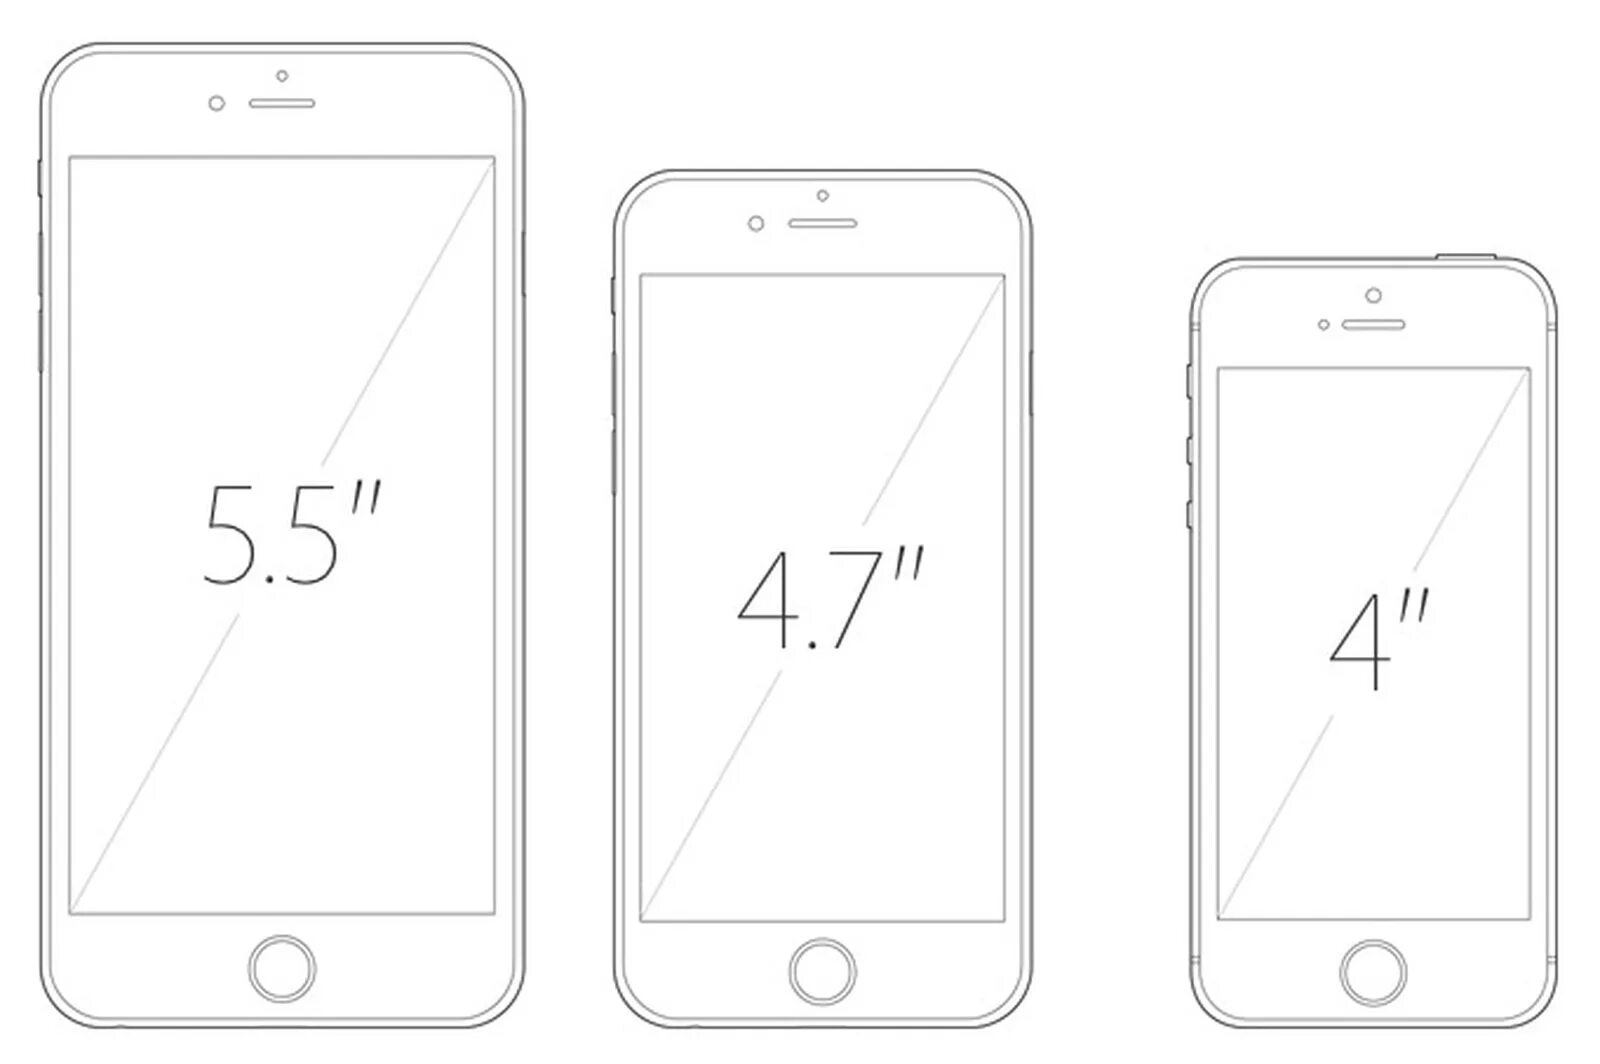 Габариты айфонов. Айфон 5 se диагональ экрана. Айфон 6s диагональ экрана. Айфон 6 диагональ экрана. Айфон 5s диагональ экрана 4.7 дюймов.